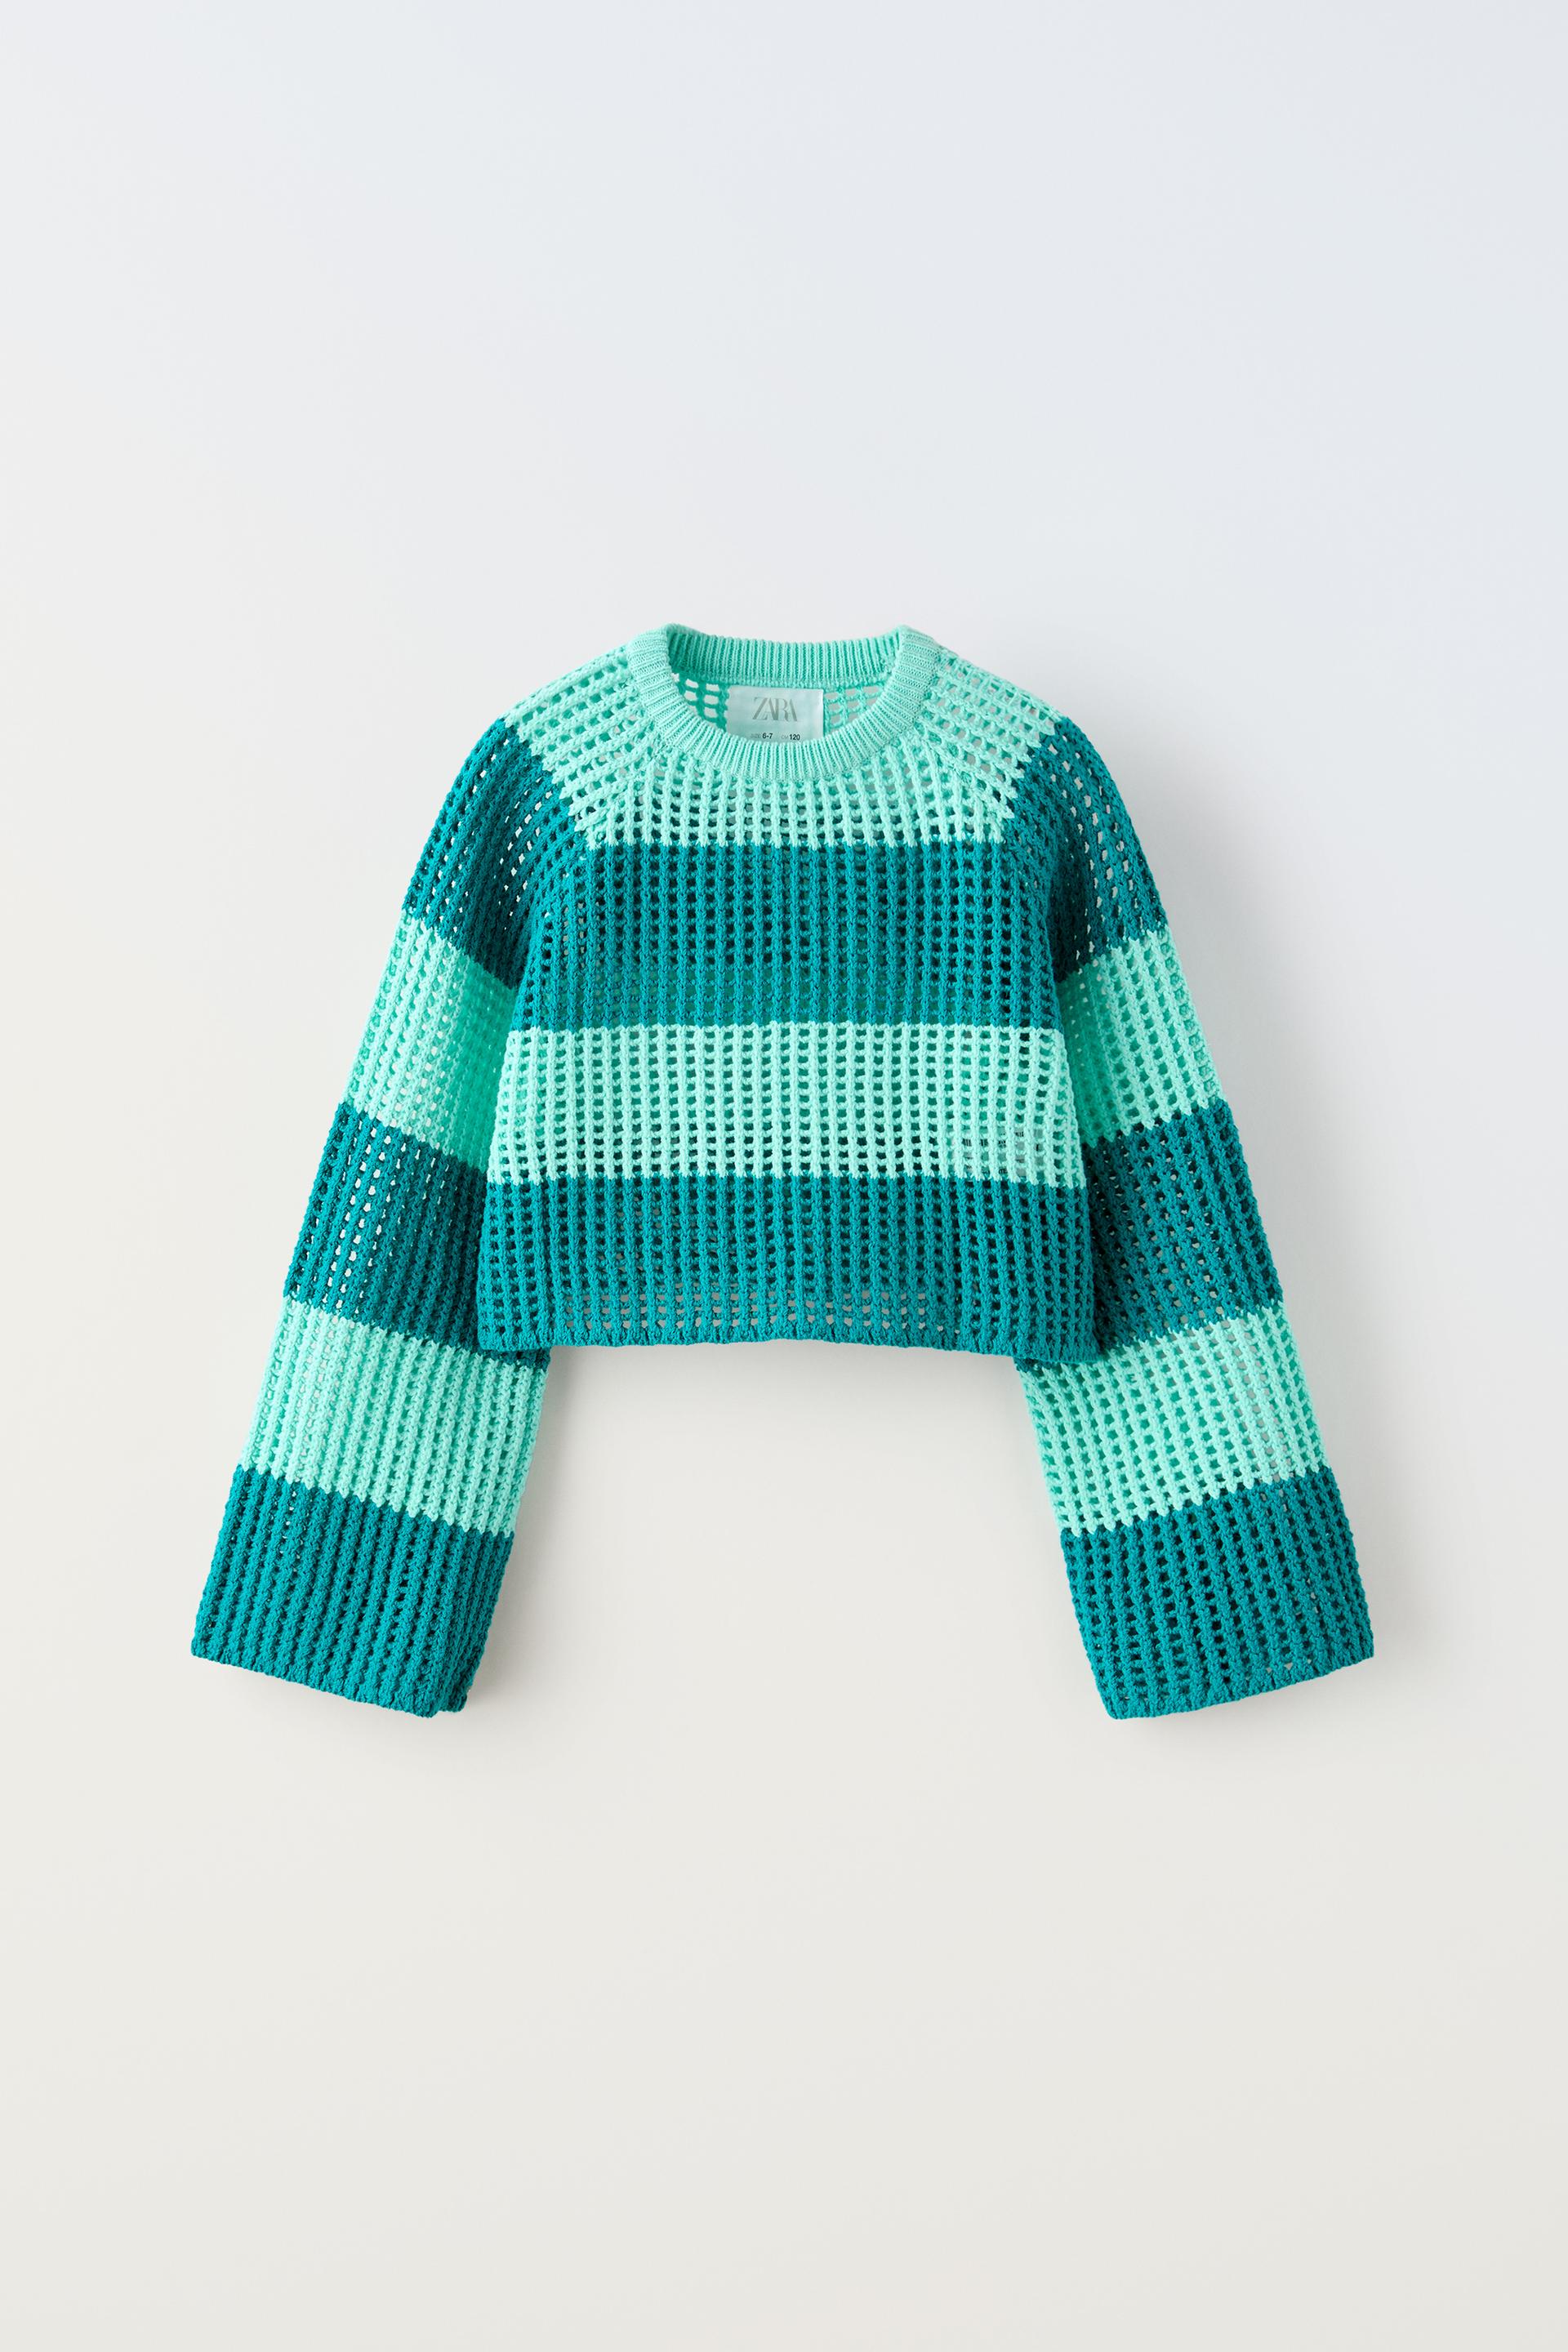 Свитер Zara Striped Knit, бирюзовый свитер zara kids ribbed knit бирюзовый